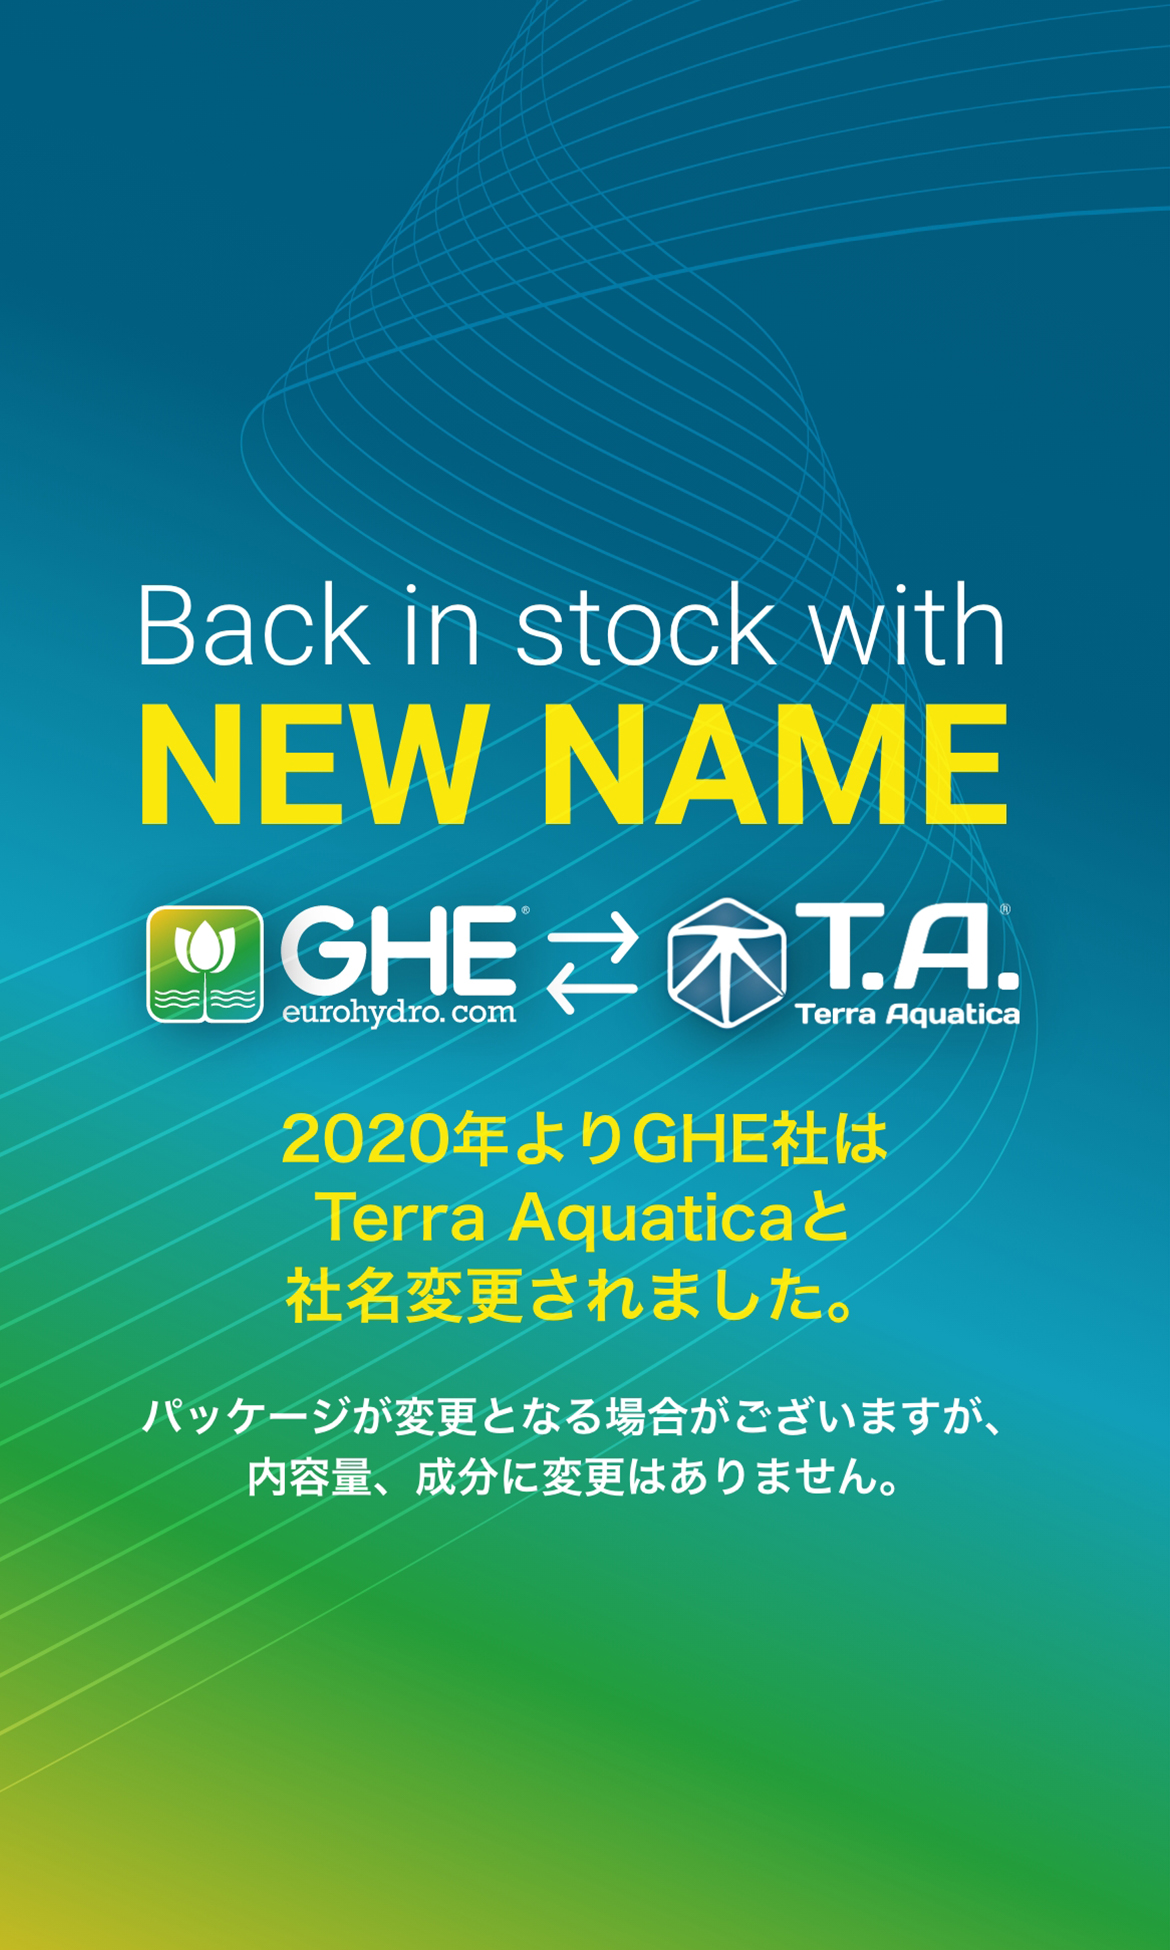 ack in stock with NEW NAME － GHE⇔T.A. － 2020年よりGHE社はTerra Aquaticaと社名変更されました。パッケージが変更となる場合がございますが、内容量、成分に変更はありません